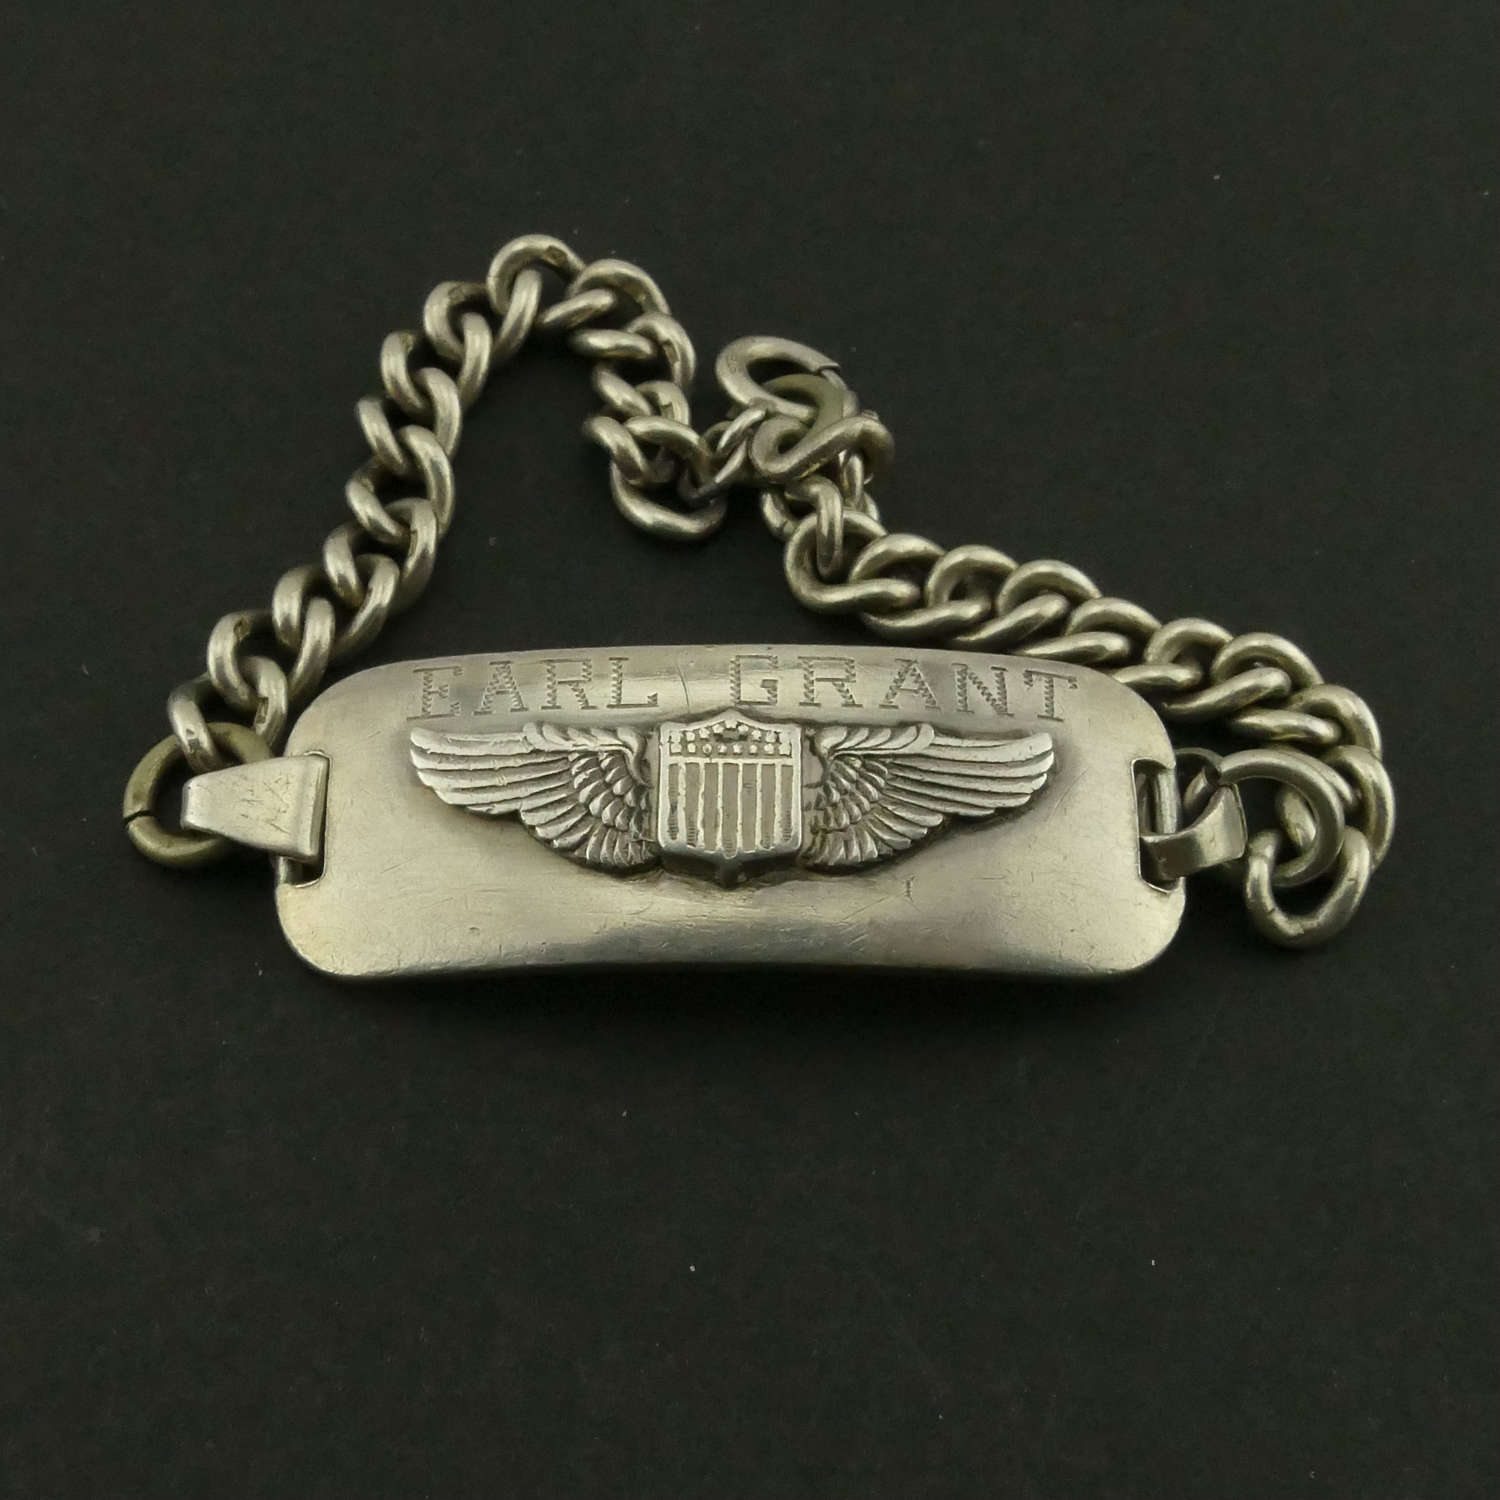 USAAF identity bracelet - silver